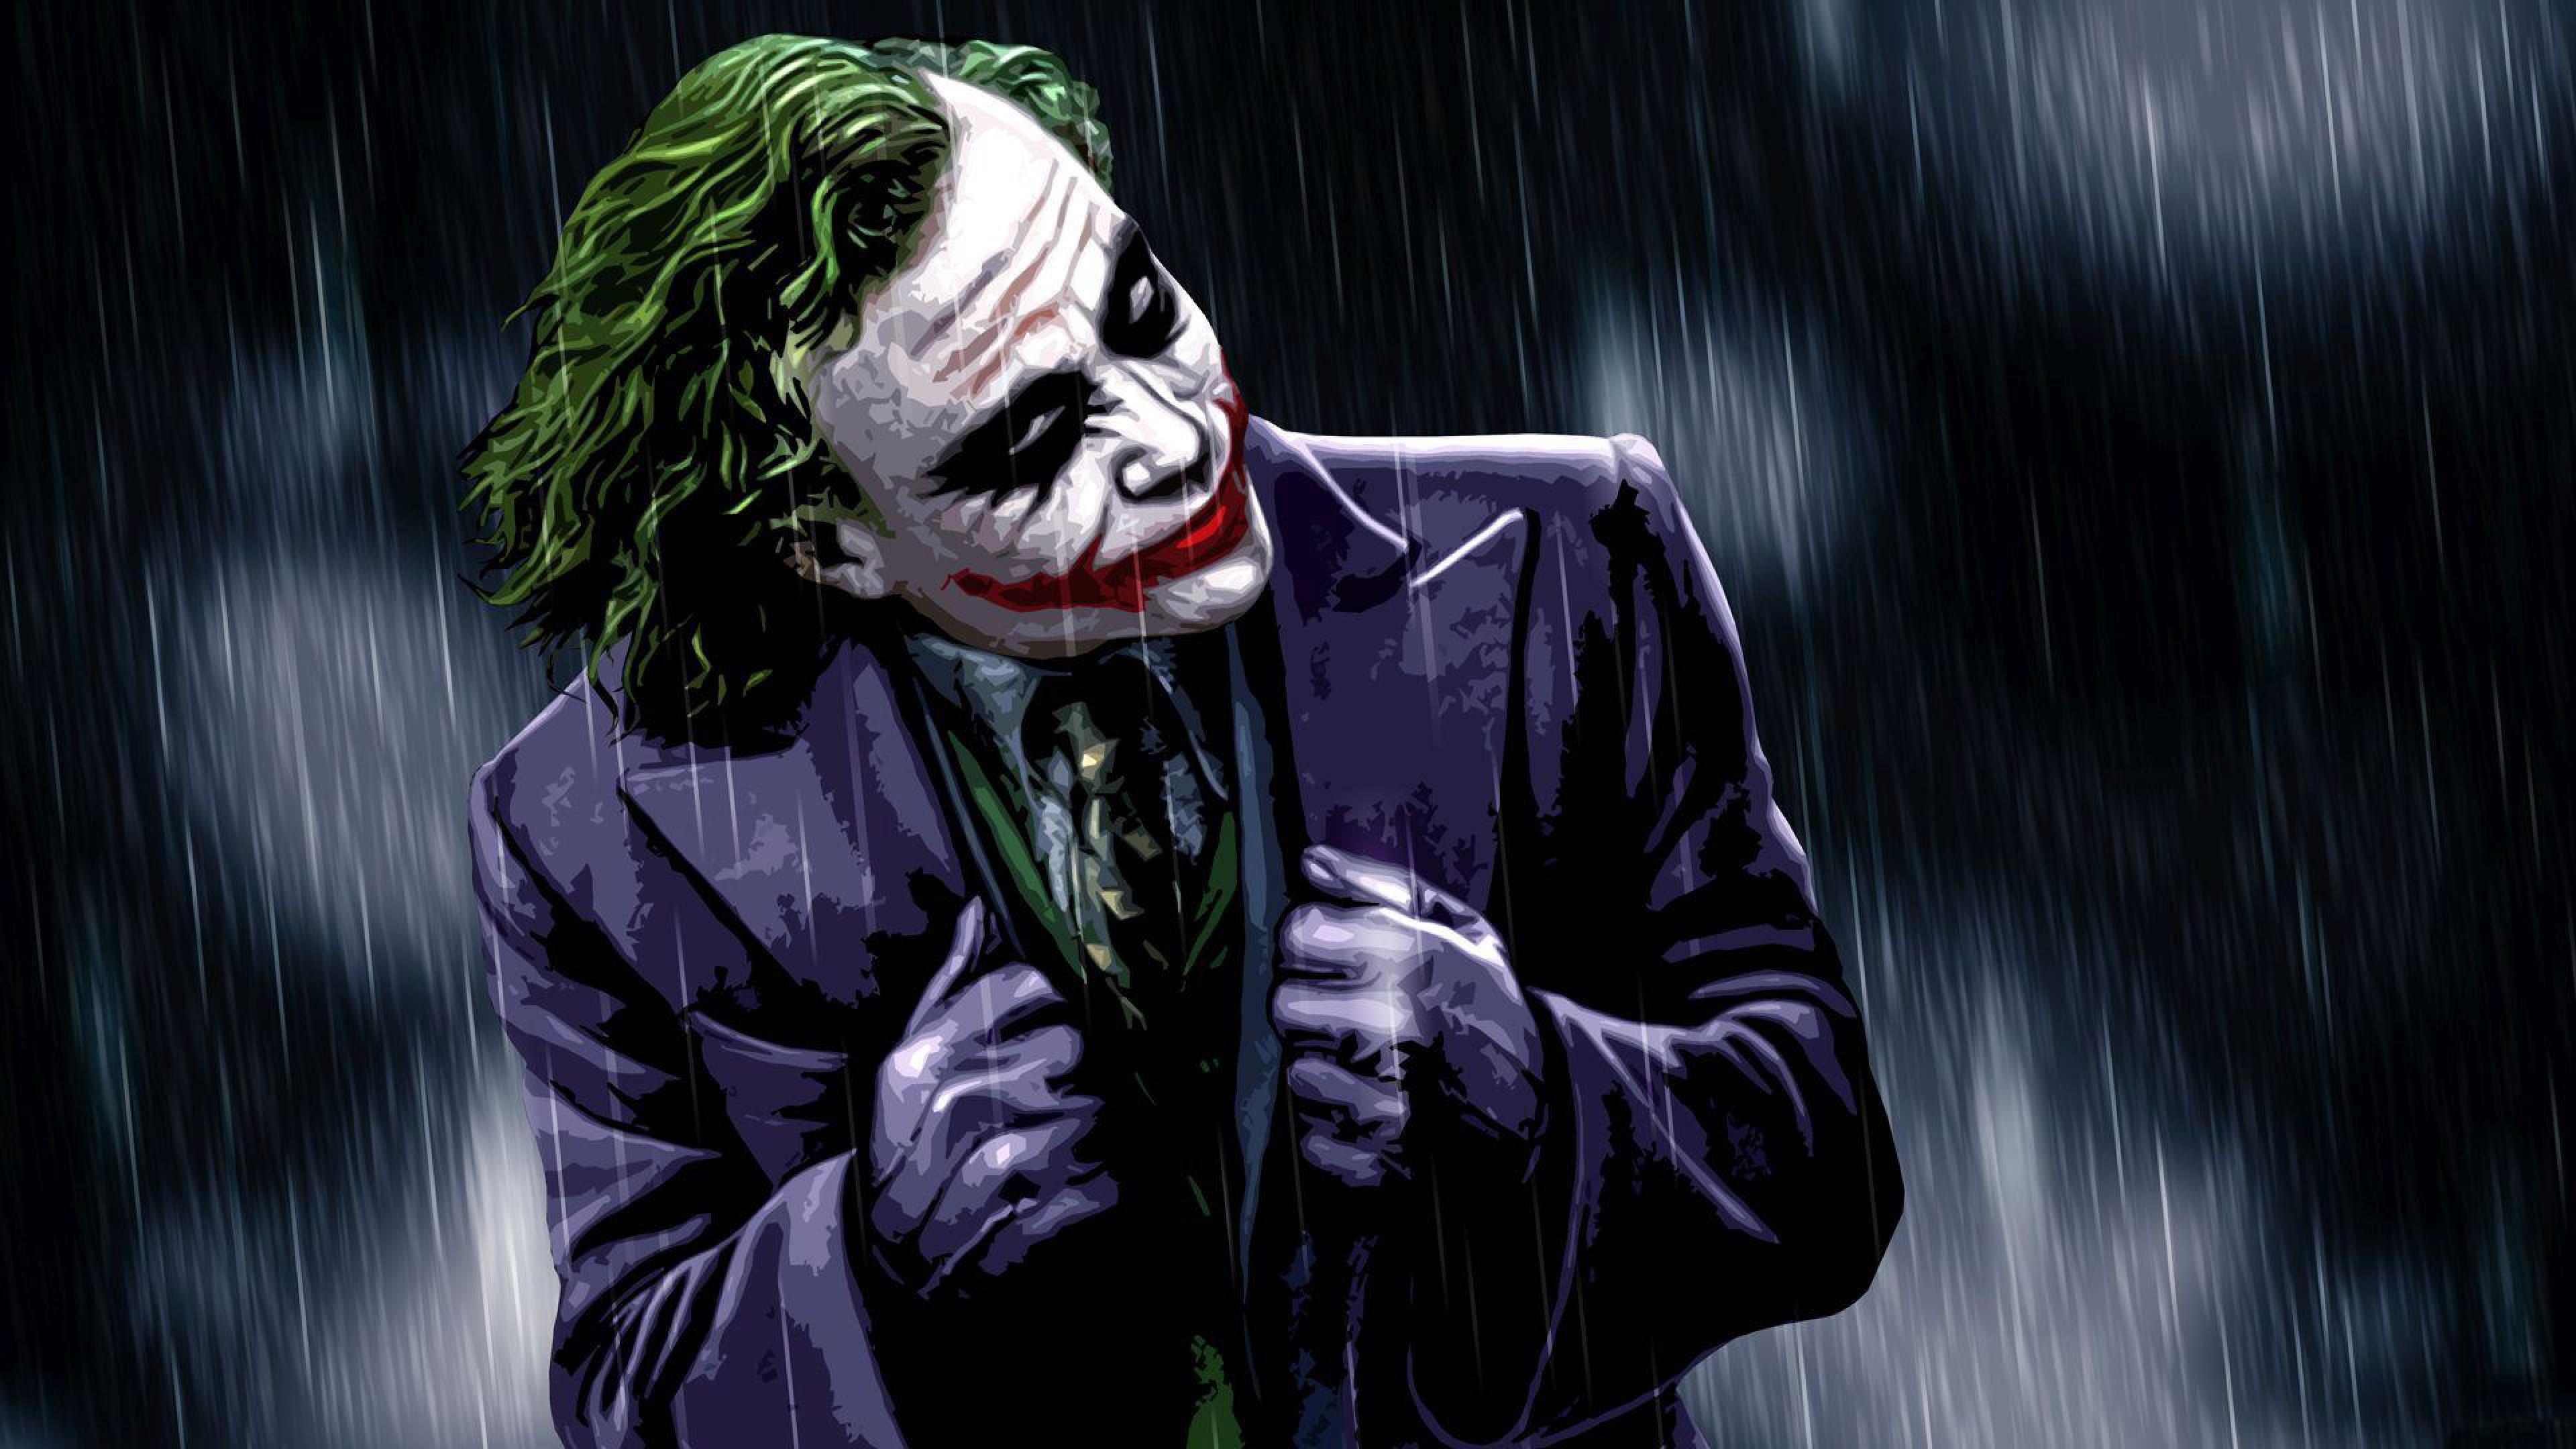 The Joker The Dark Knight Desktop Wallpaper Hd For Mobile ... - 3840 x 2160 jpeg 552kB